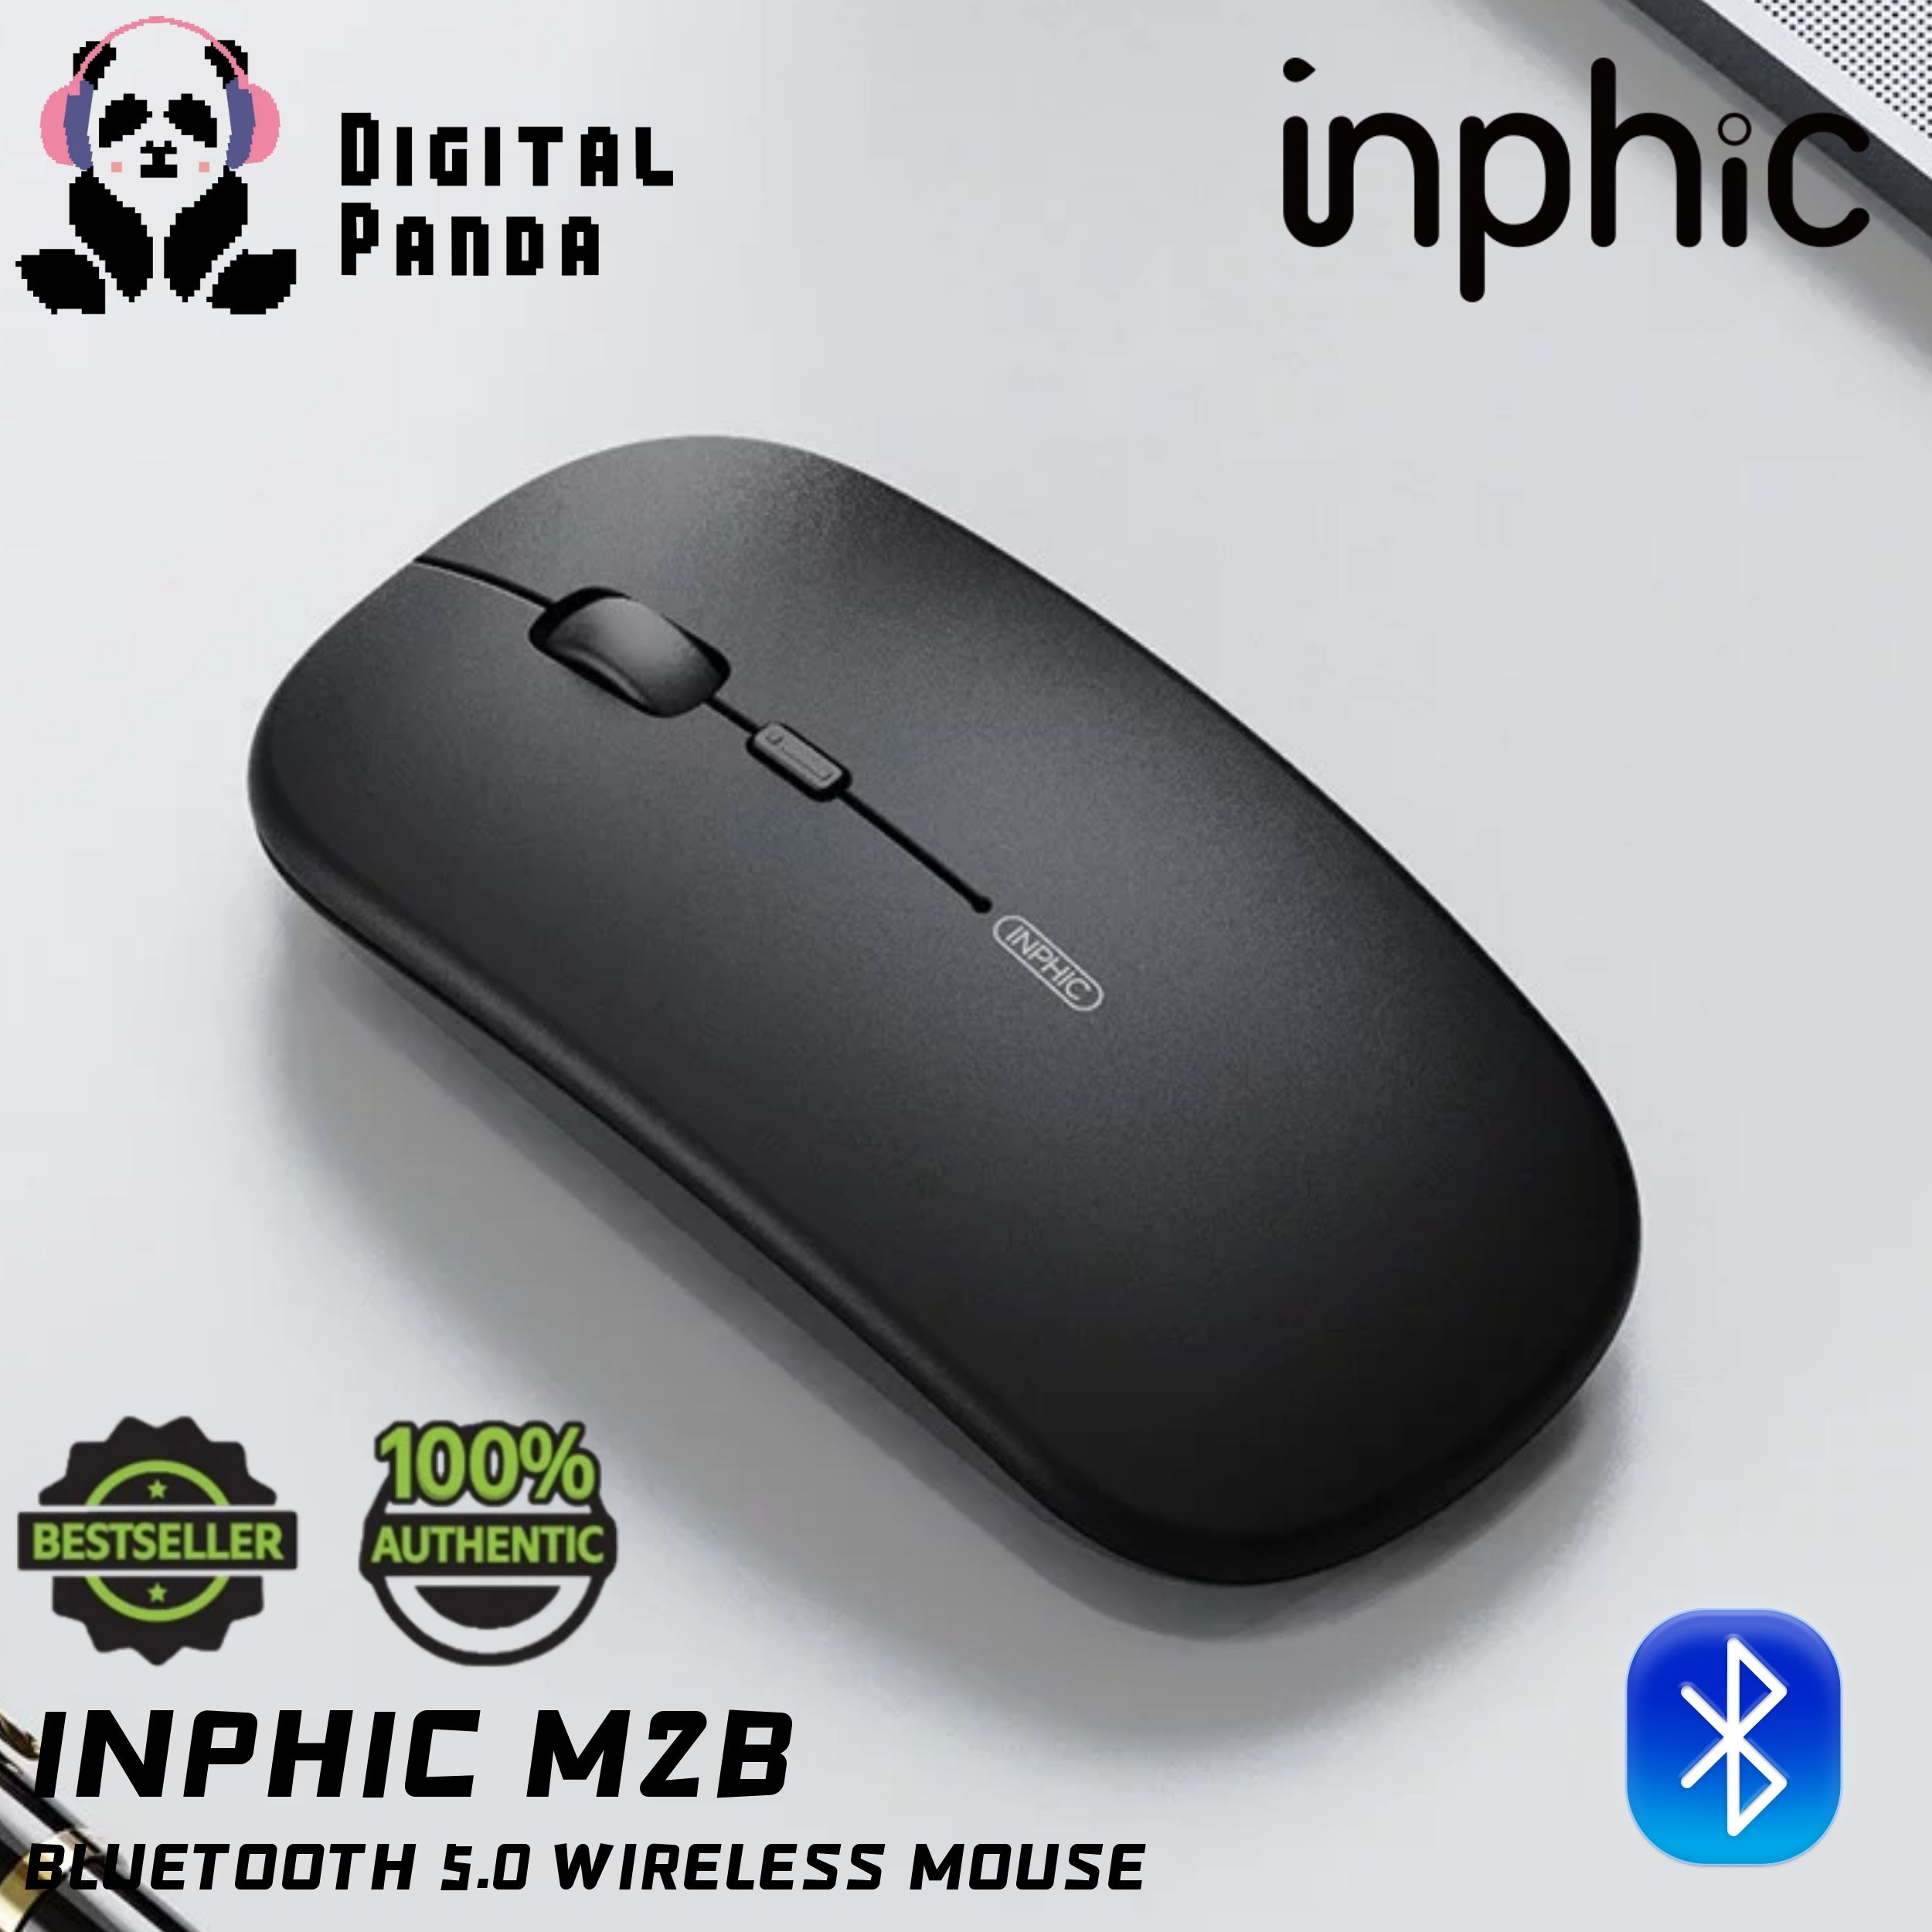 Inphic M2B Bluetooth 5.0 Mouse เมาส์บลูทูธ ไร้สาย สำหรับ คอมพิวเตอร์ และโน๊ตบุ้ค 800-1200-1600DPI Rechargeable Battery